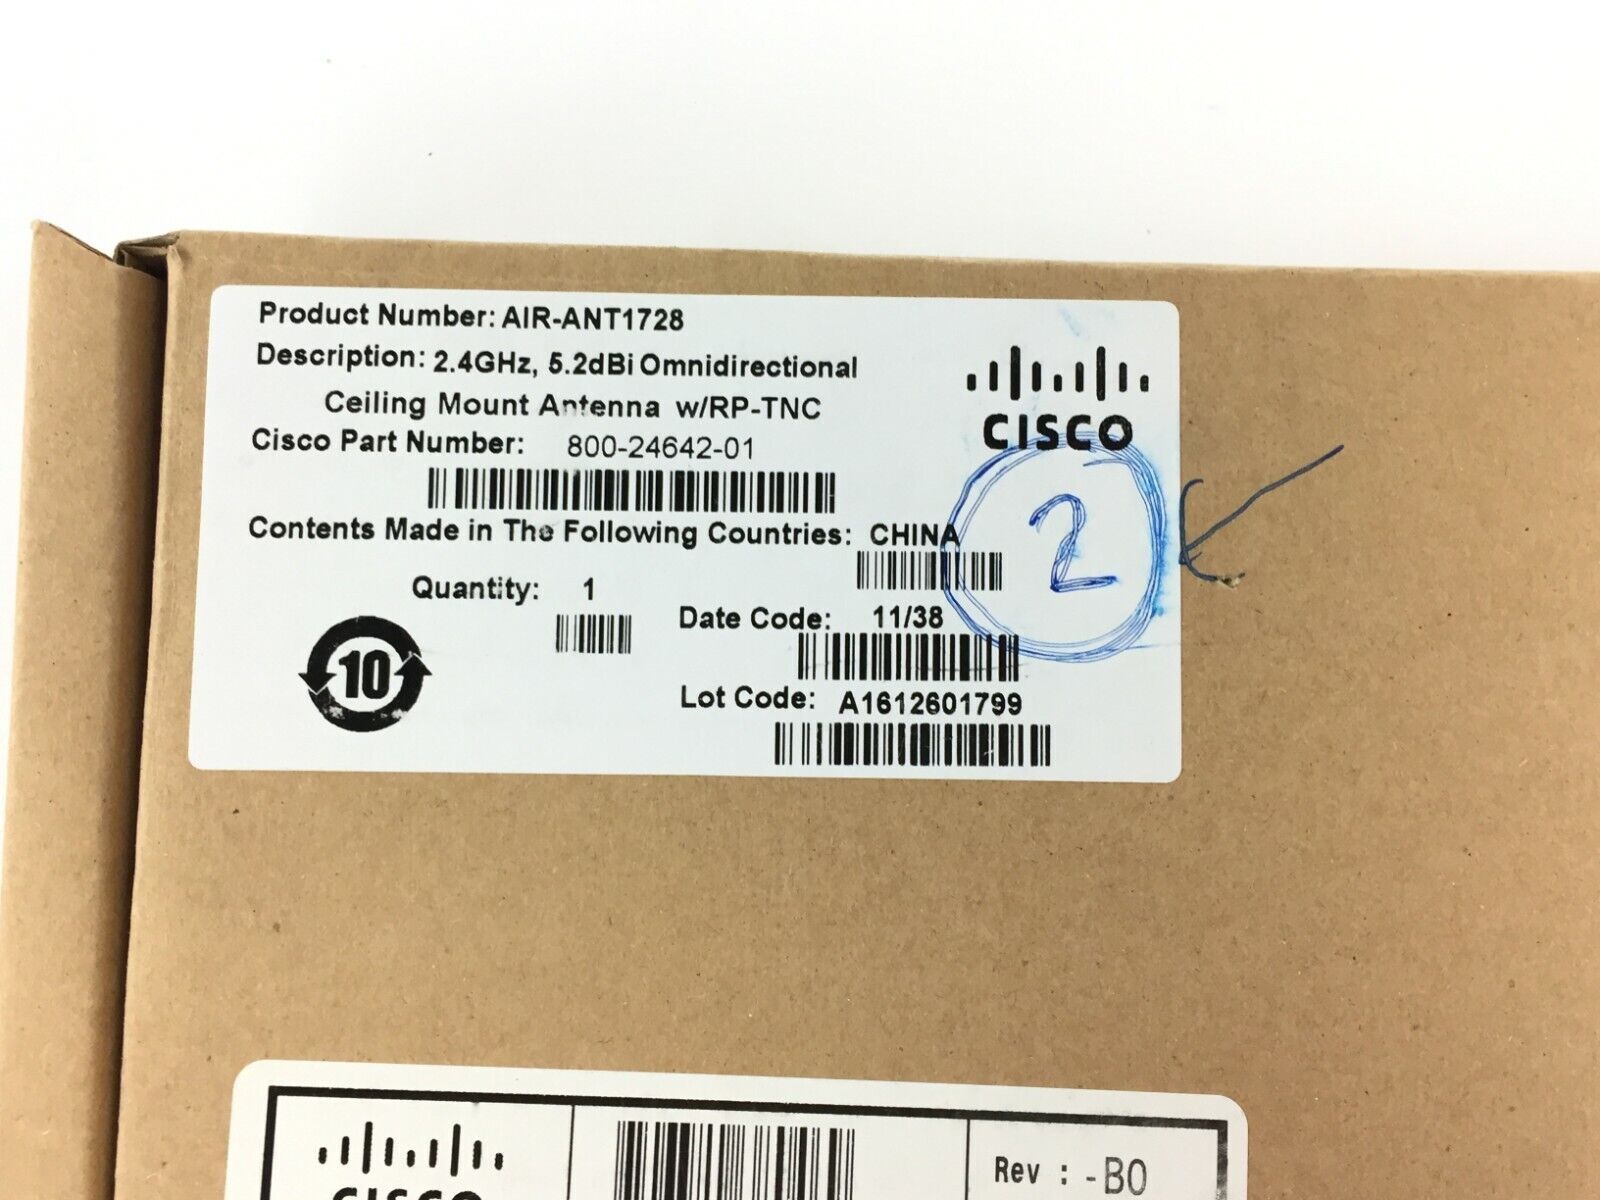 Cisco 800-24642-01 AIR-ANT1728 Celing Mount 2.4GHz 5.2dBi Omnidirectional